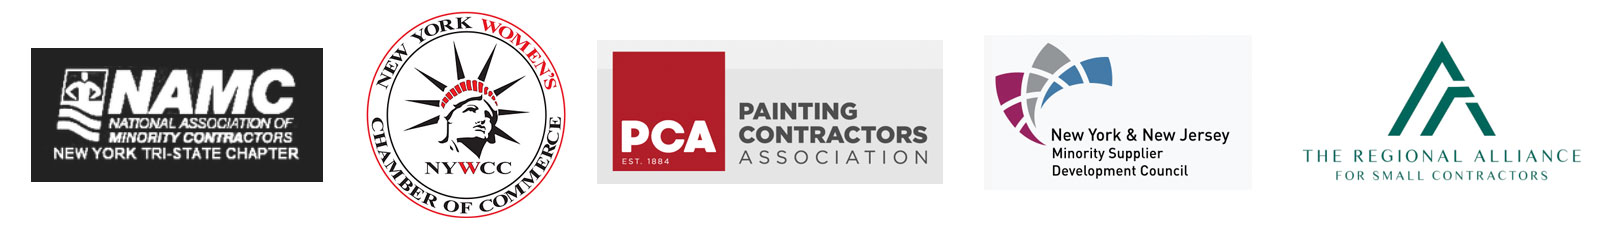 organizations-and-affiliations-UMAC-Painting-&-Decorating-LLC